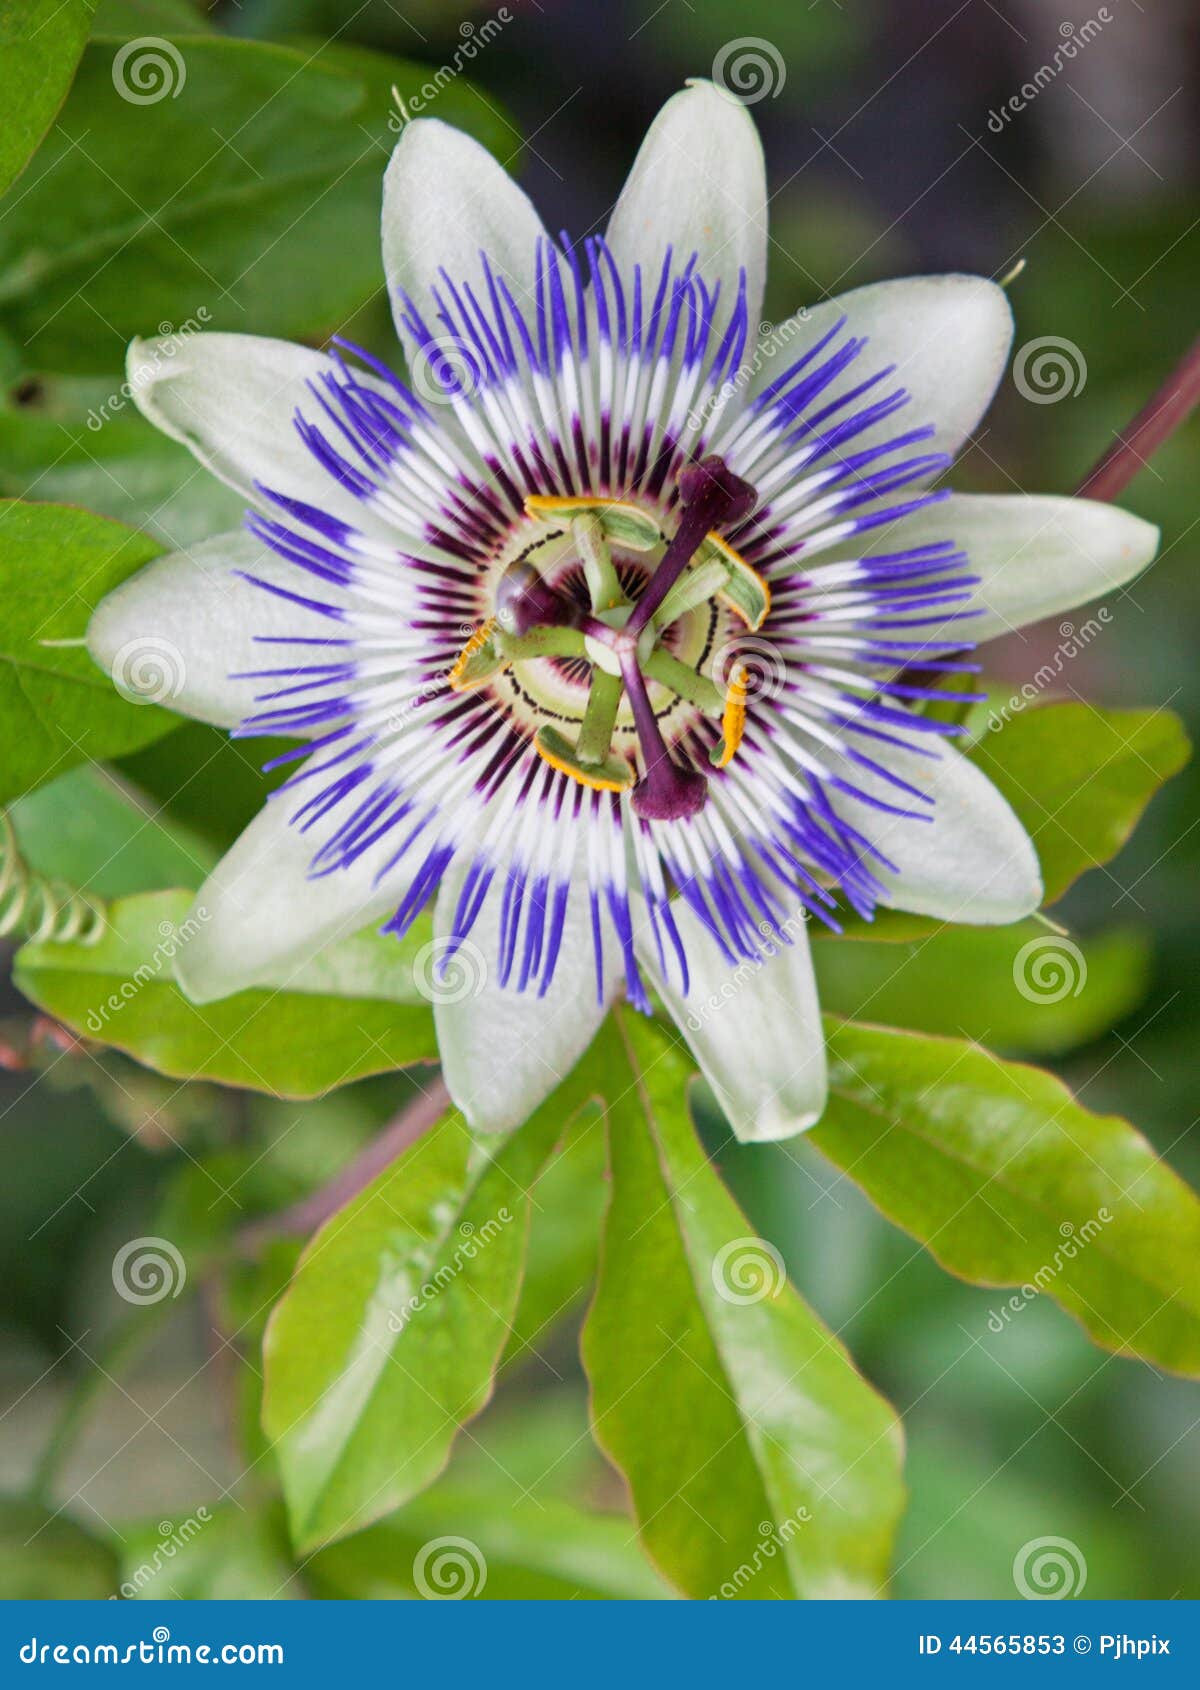 common passion flower (passiflora caerulea)